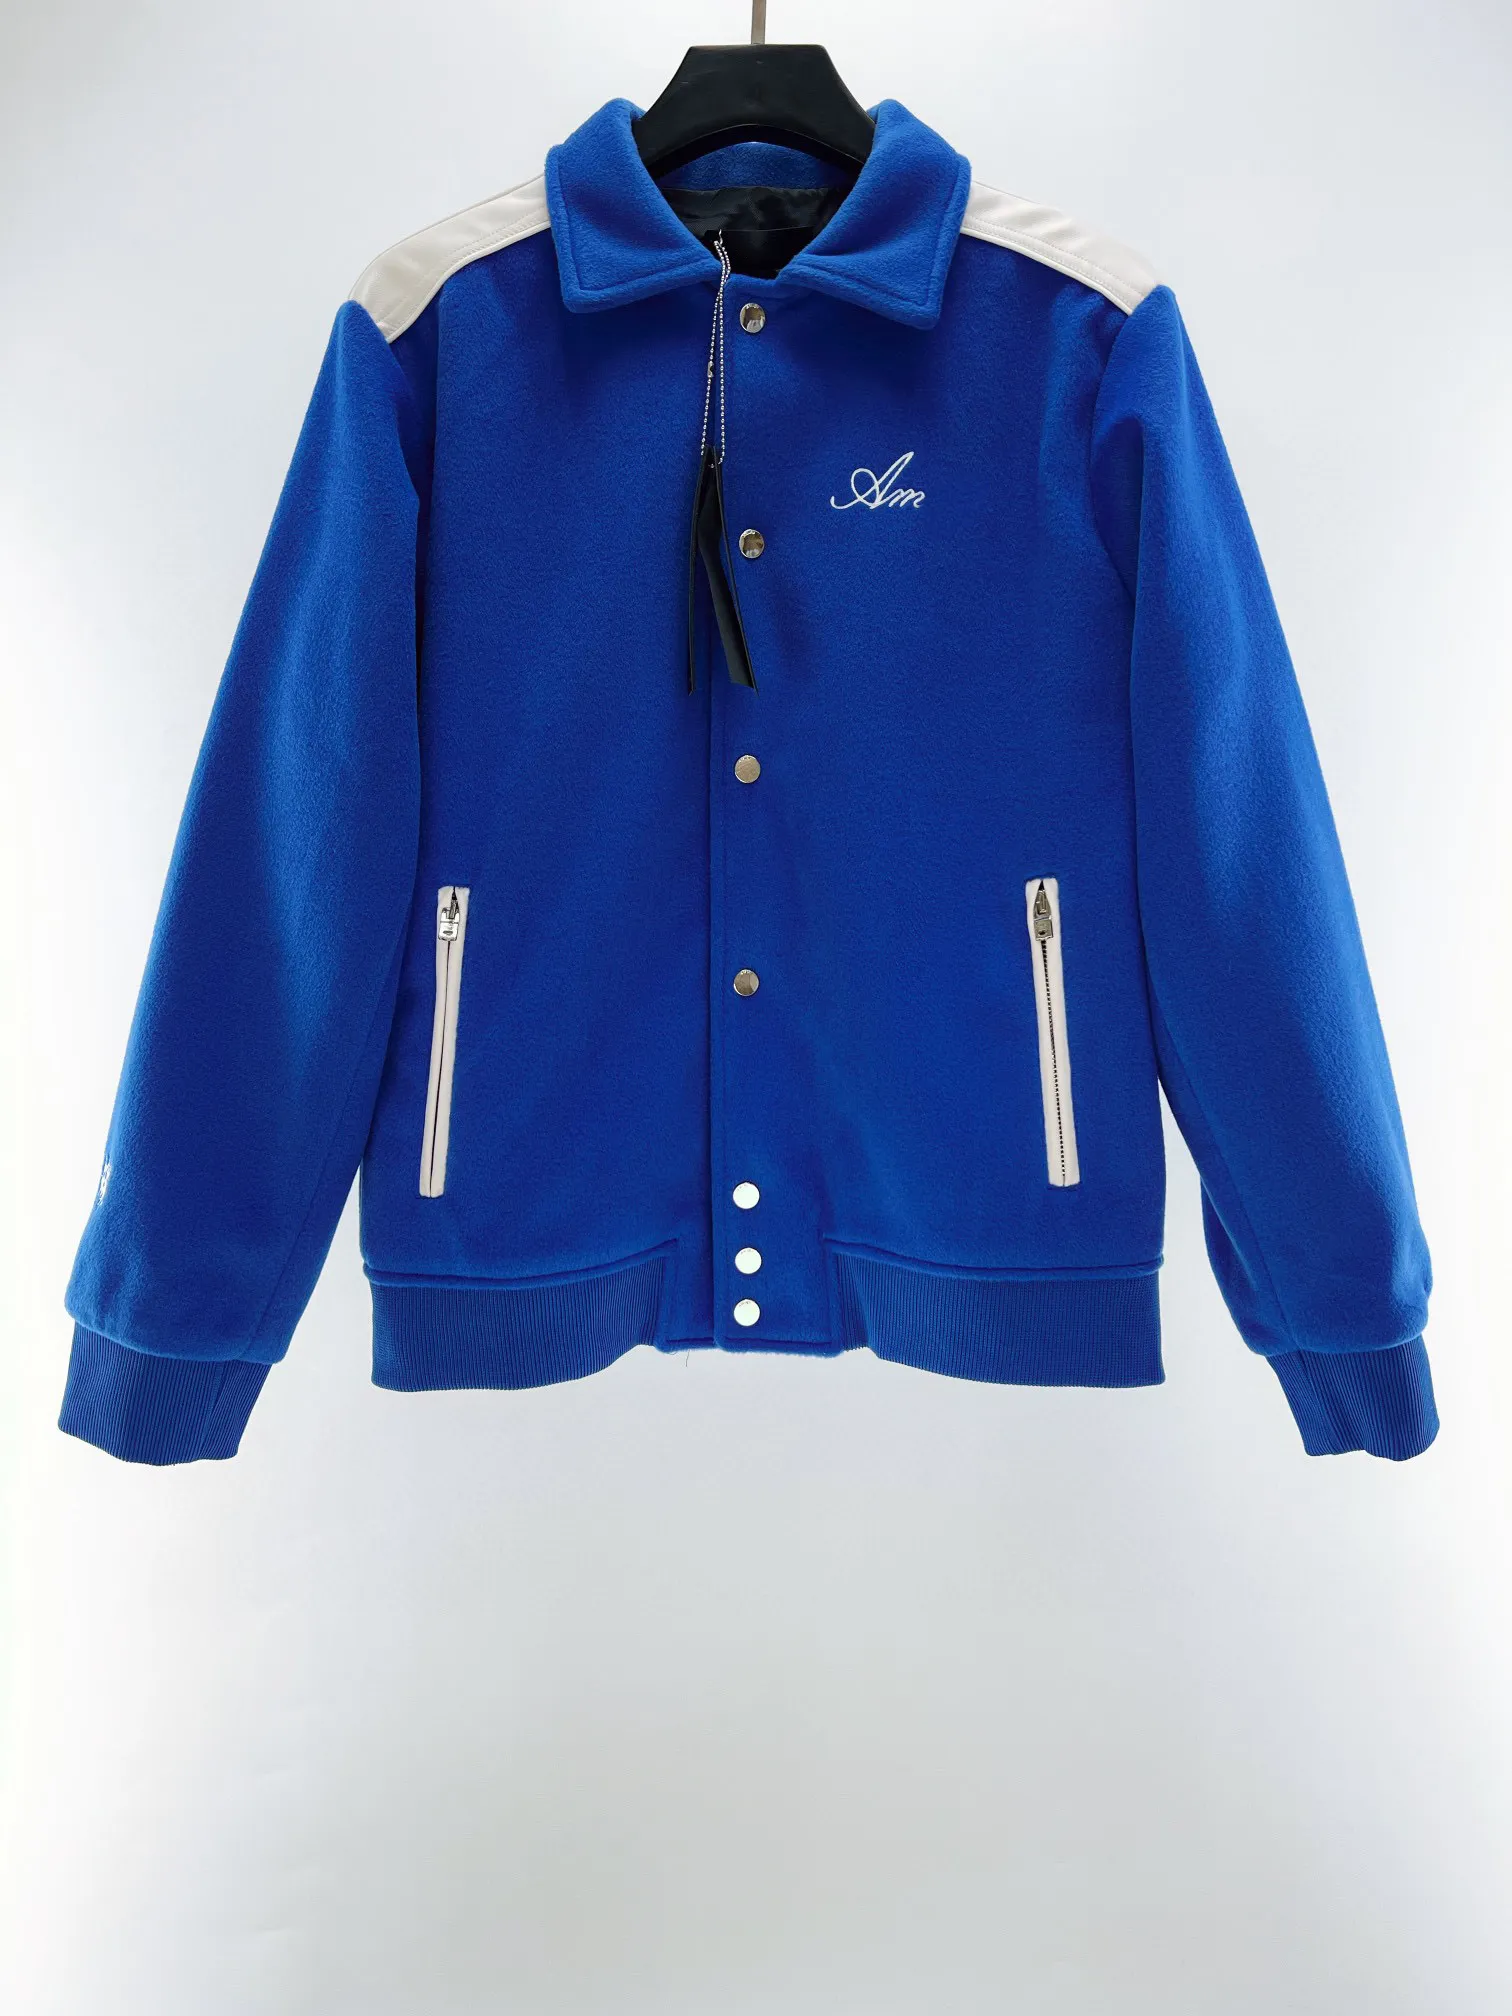 Designer masculino Casaco azul Baseball Jacket Windbreaker Windbreak Designers Carta Bordado costurando algodão Casa única cor de roupas esportivas